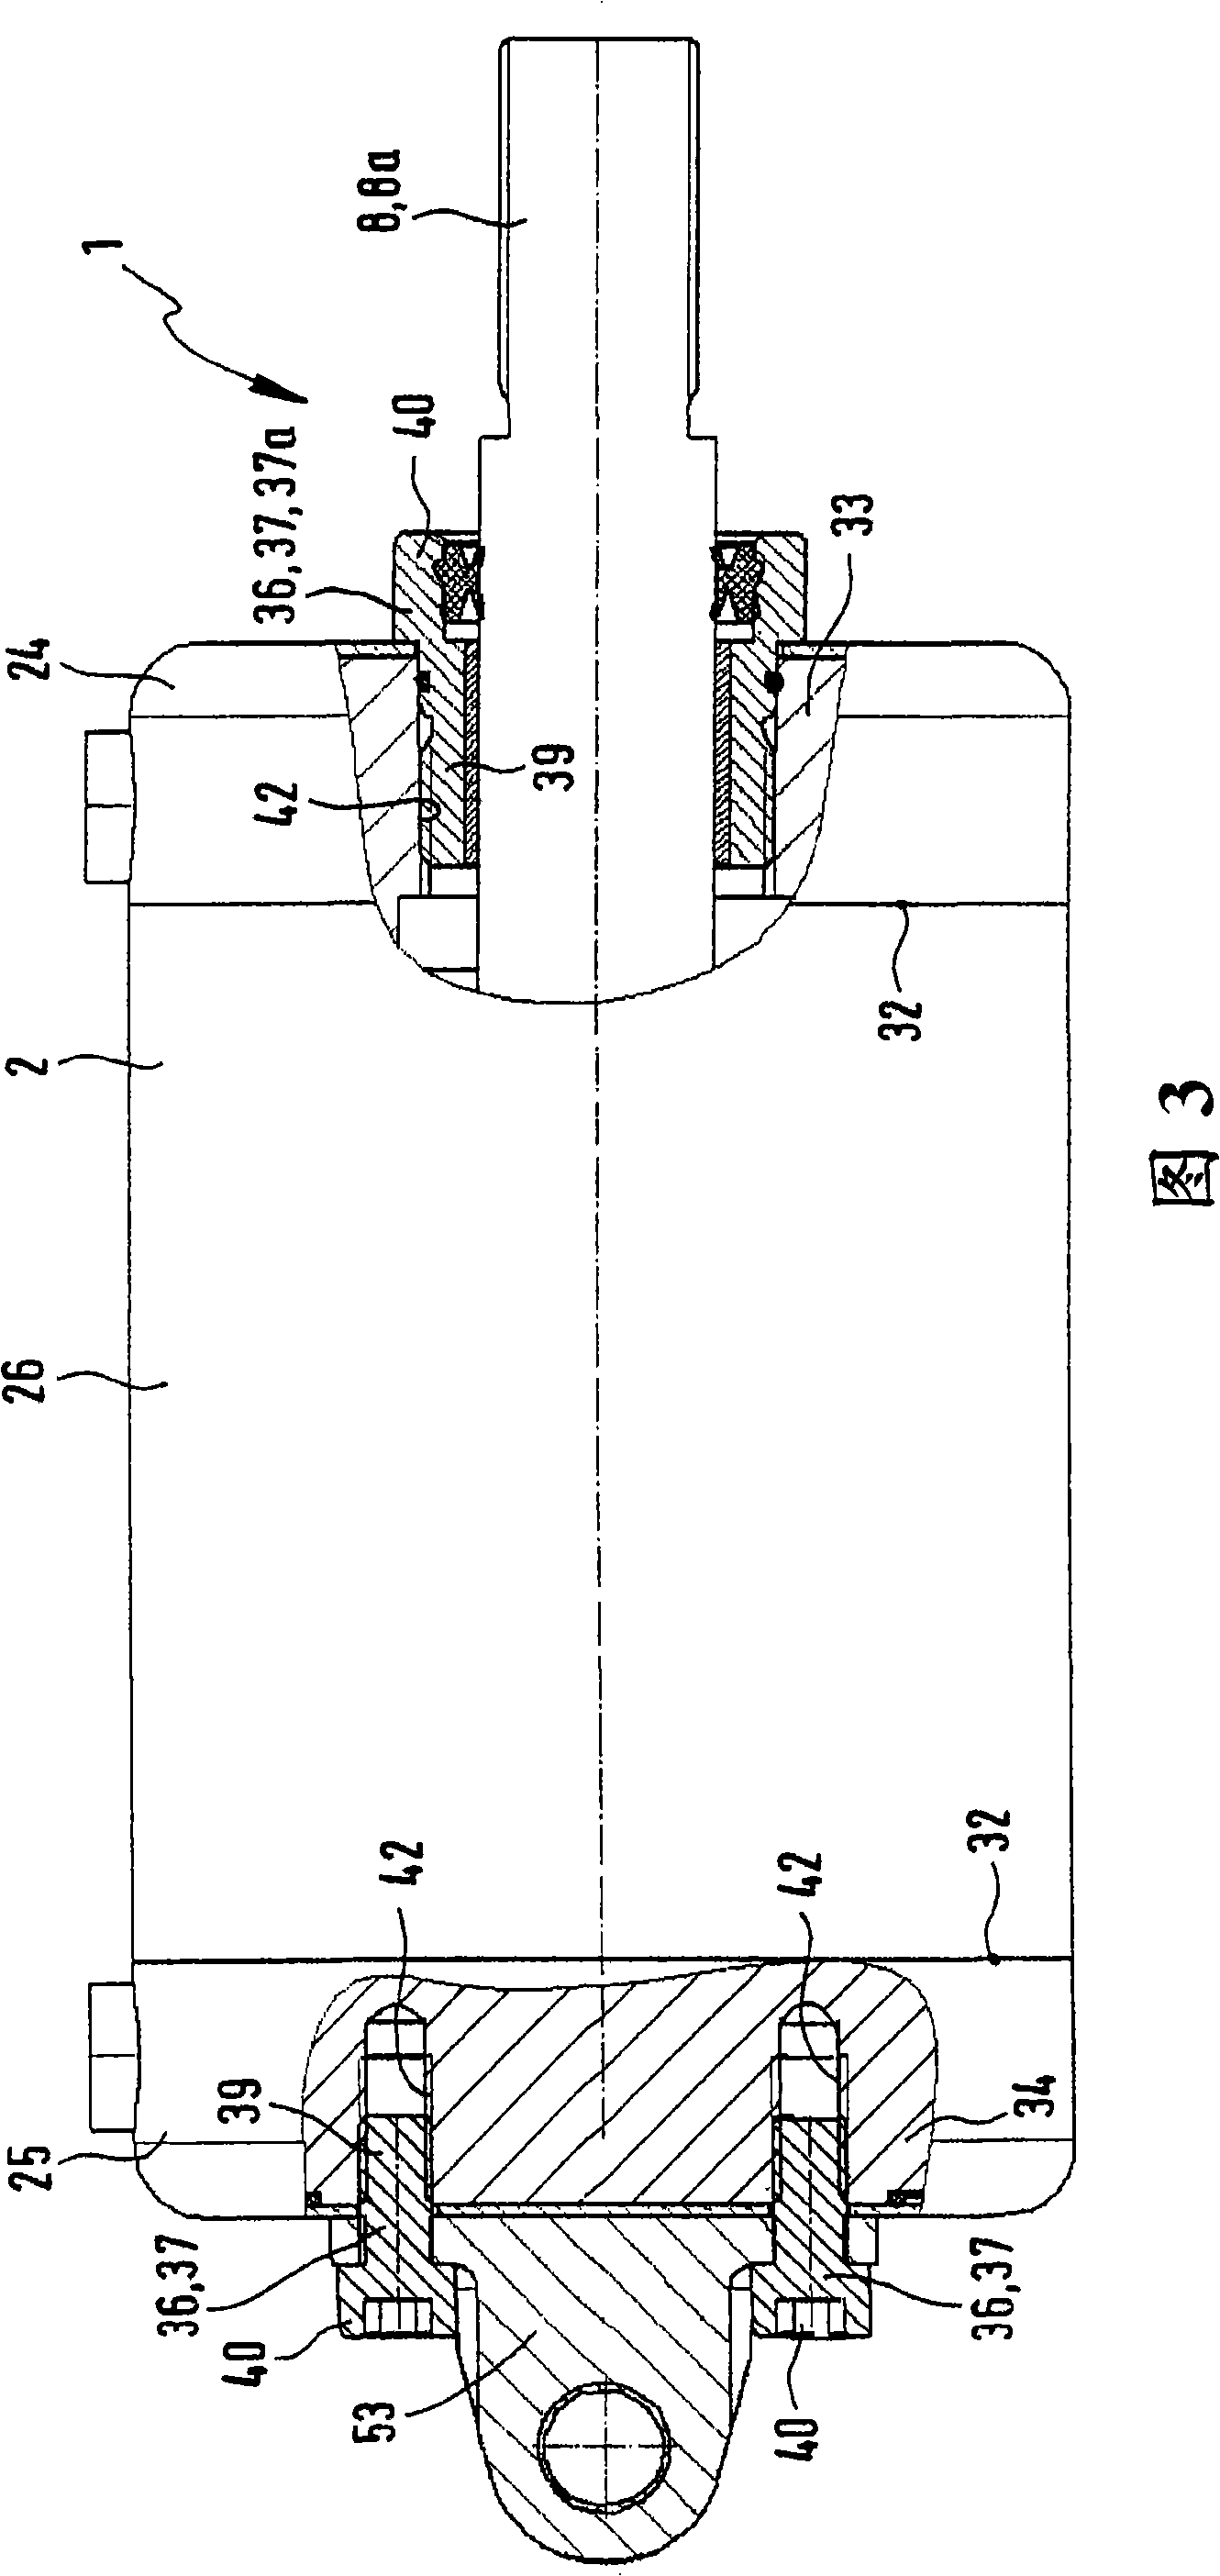 Fluid operated linear motor